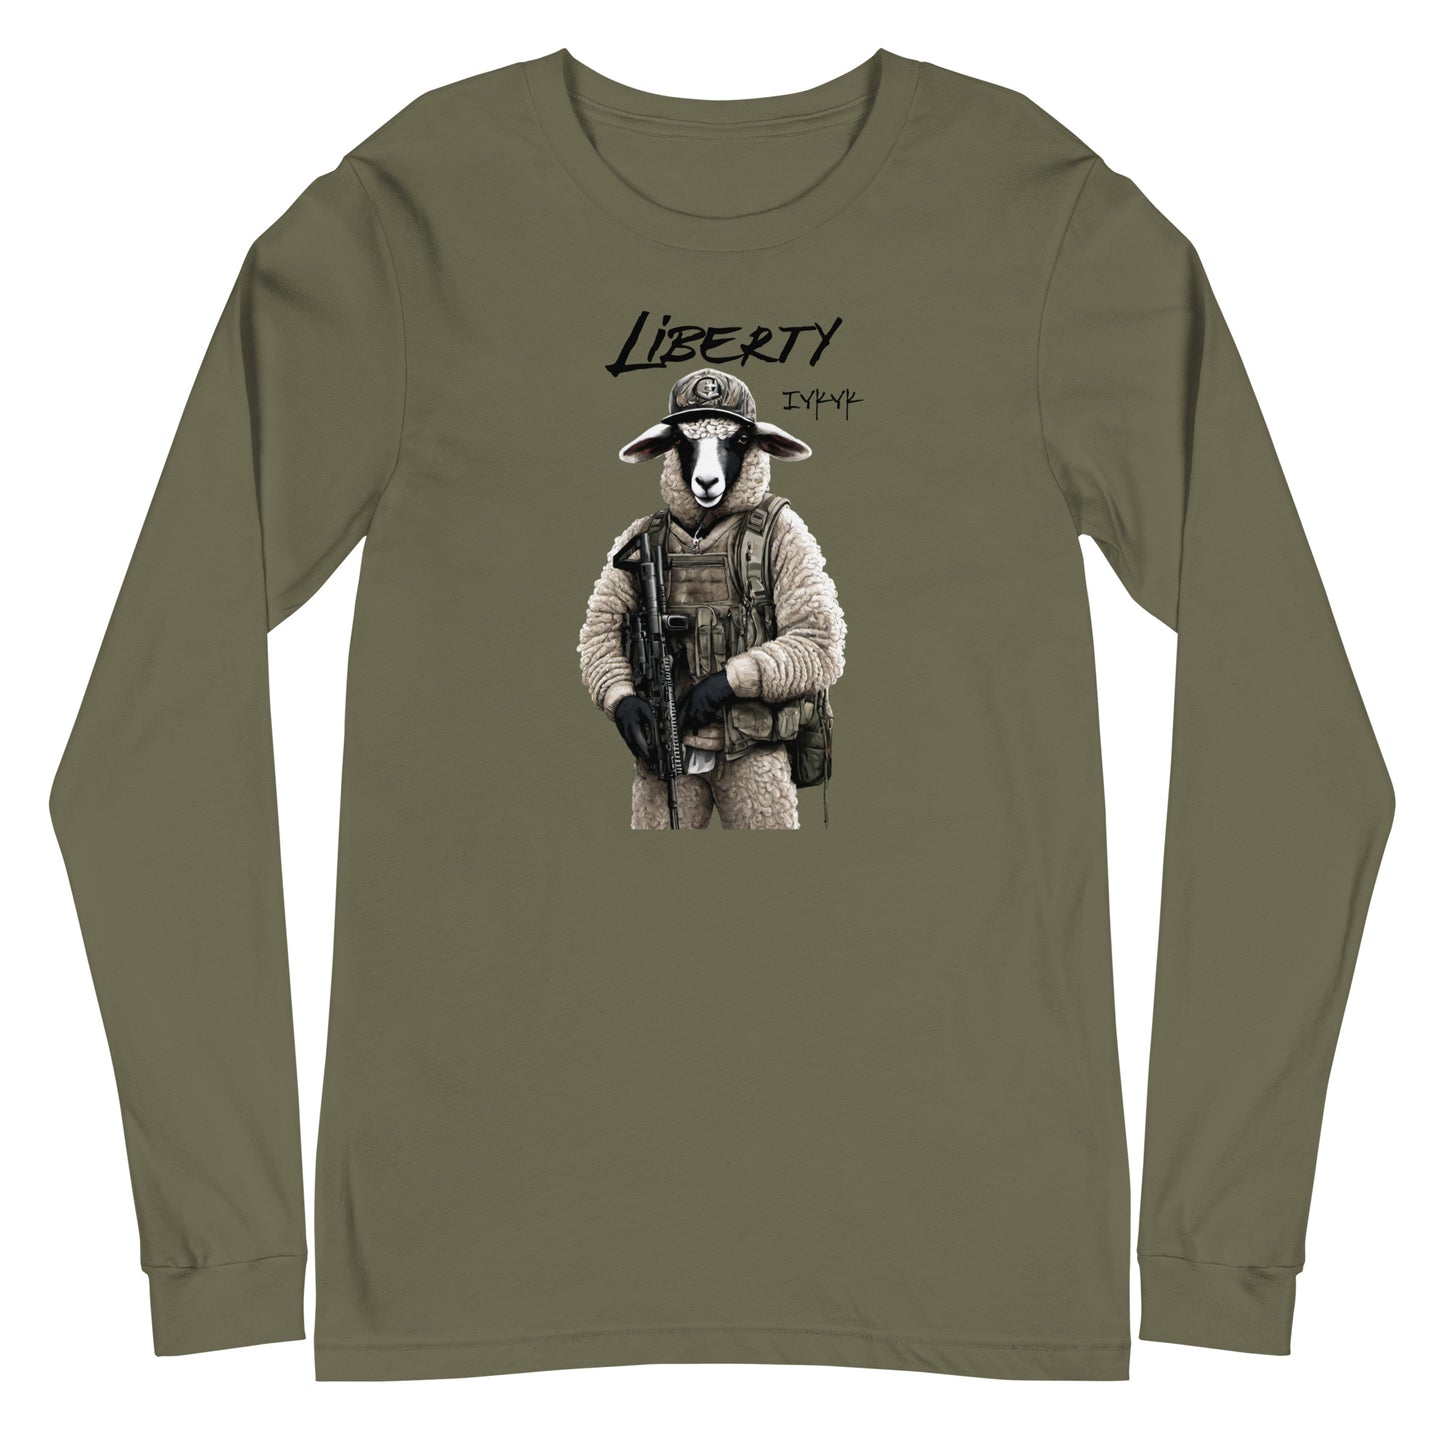 Liberty Lamb Long Sleeve Graphic Tee Military Green